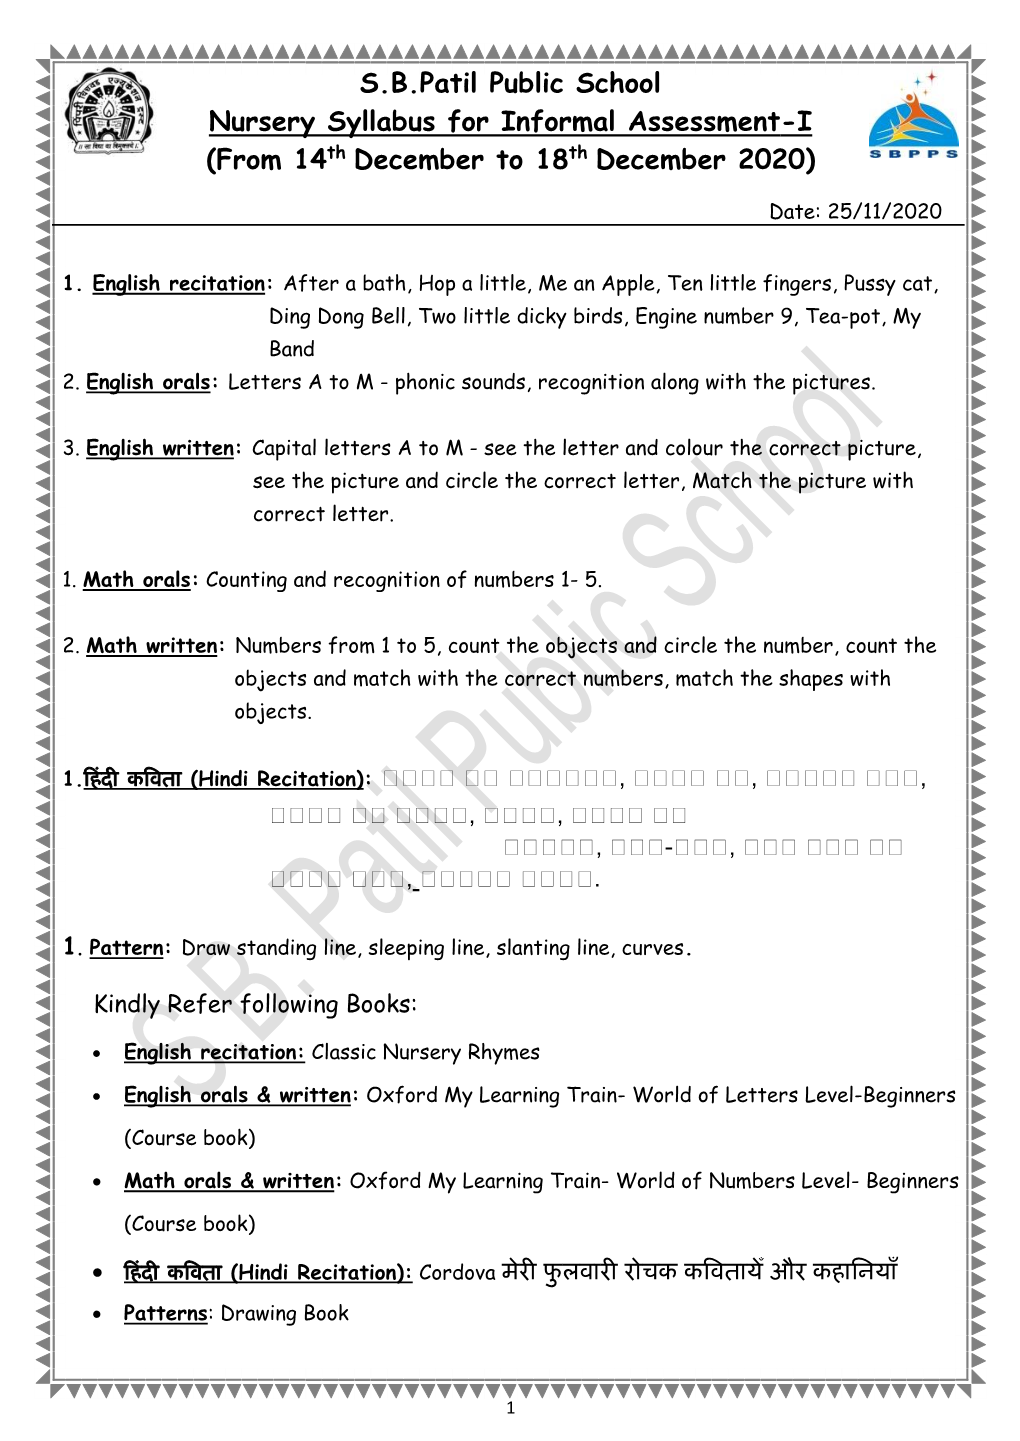 Sbpatil Public School Nursery Syllabus for Informal Assessment-I